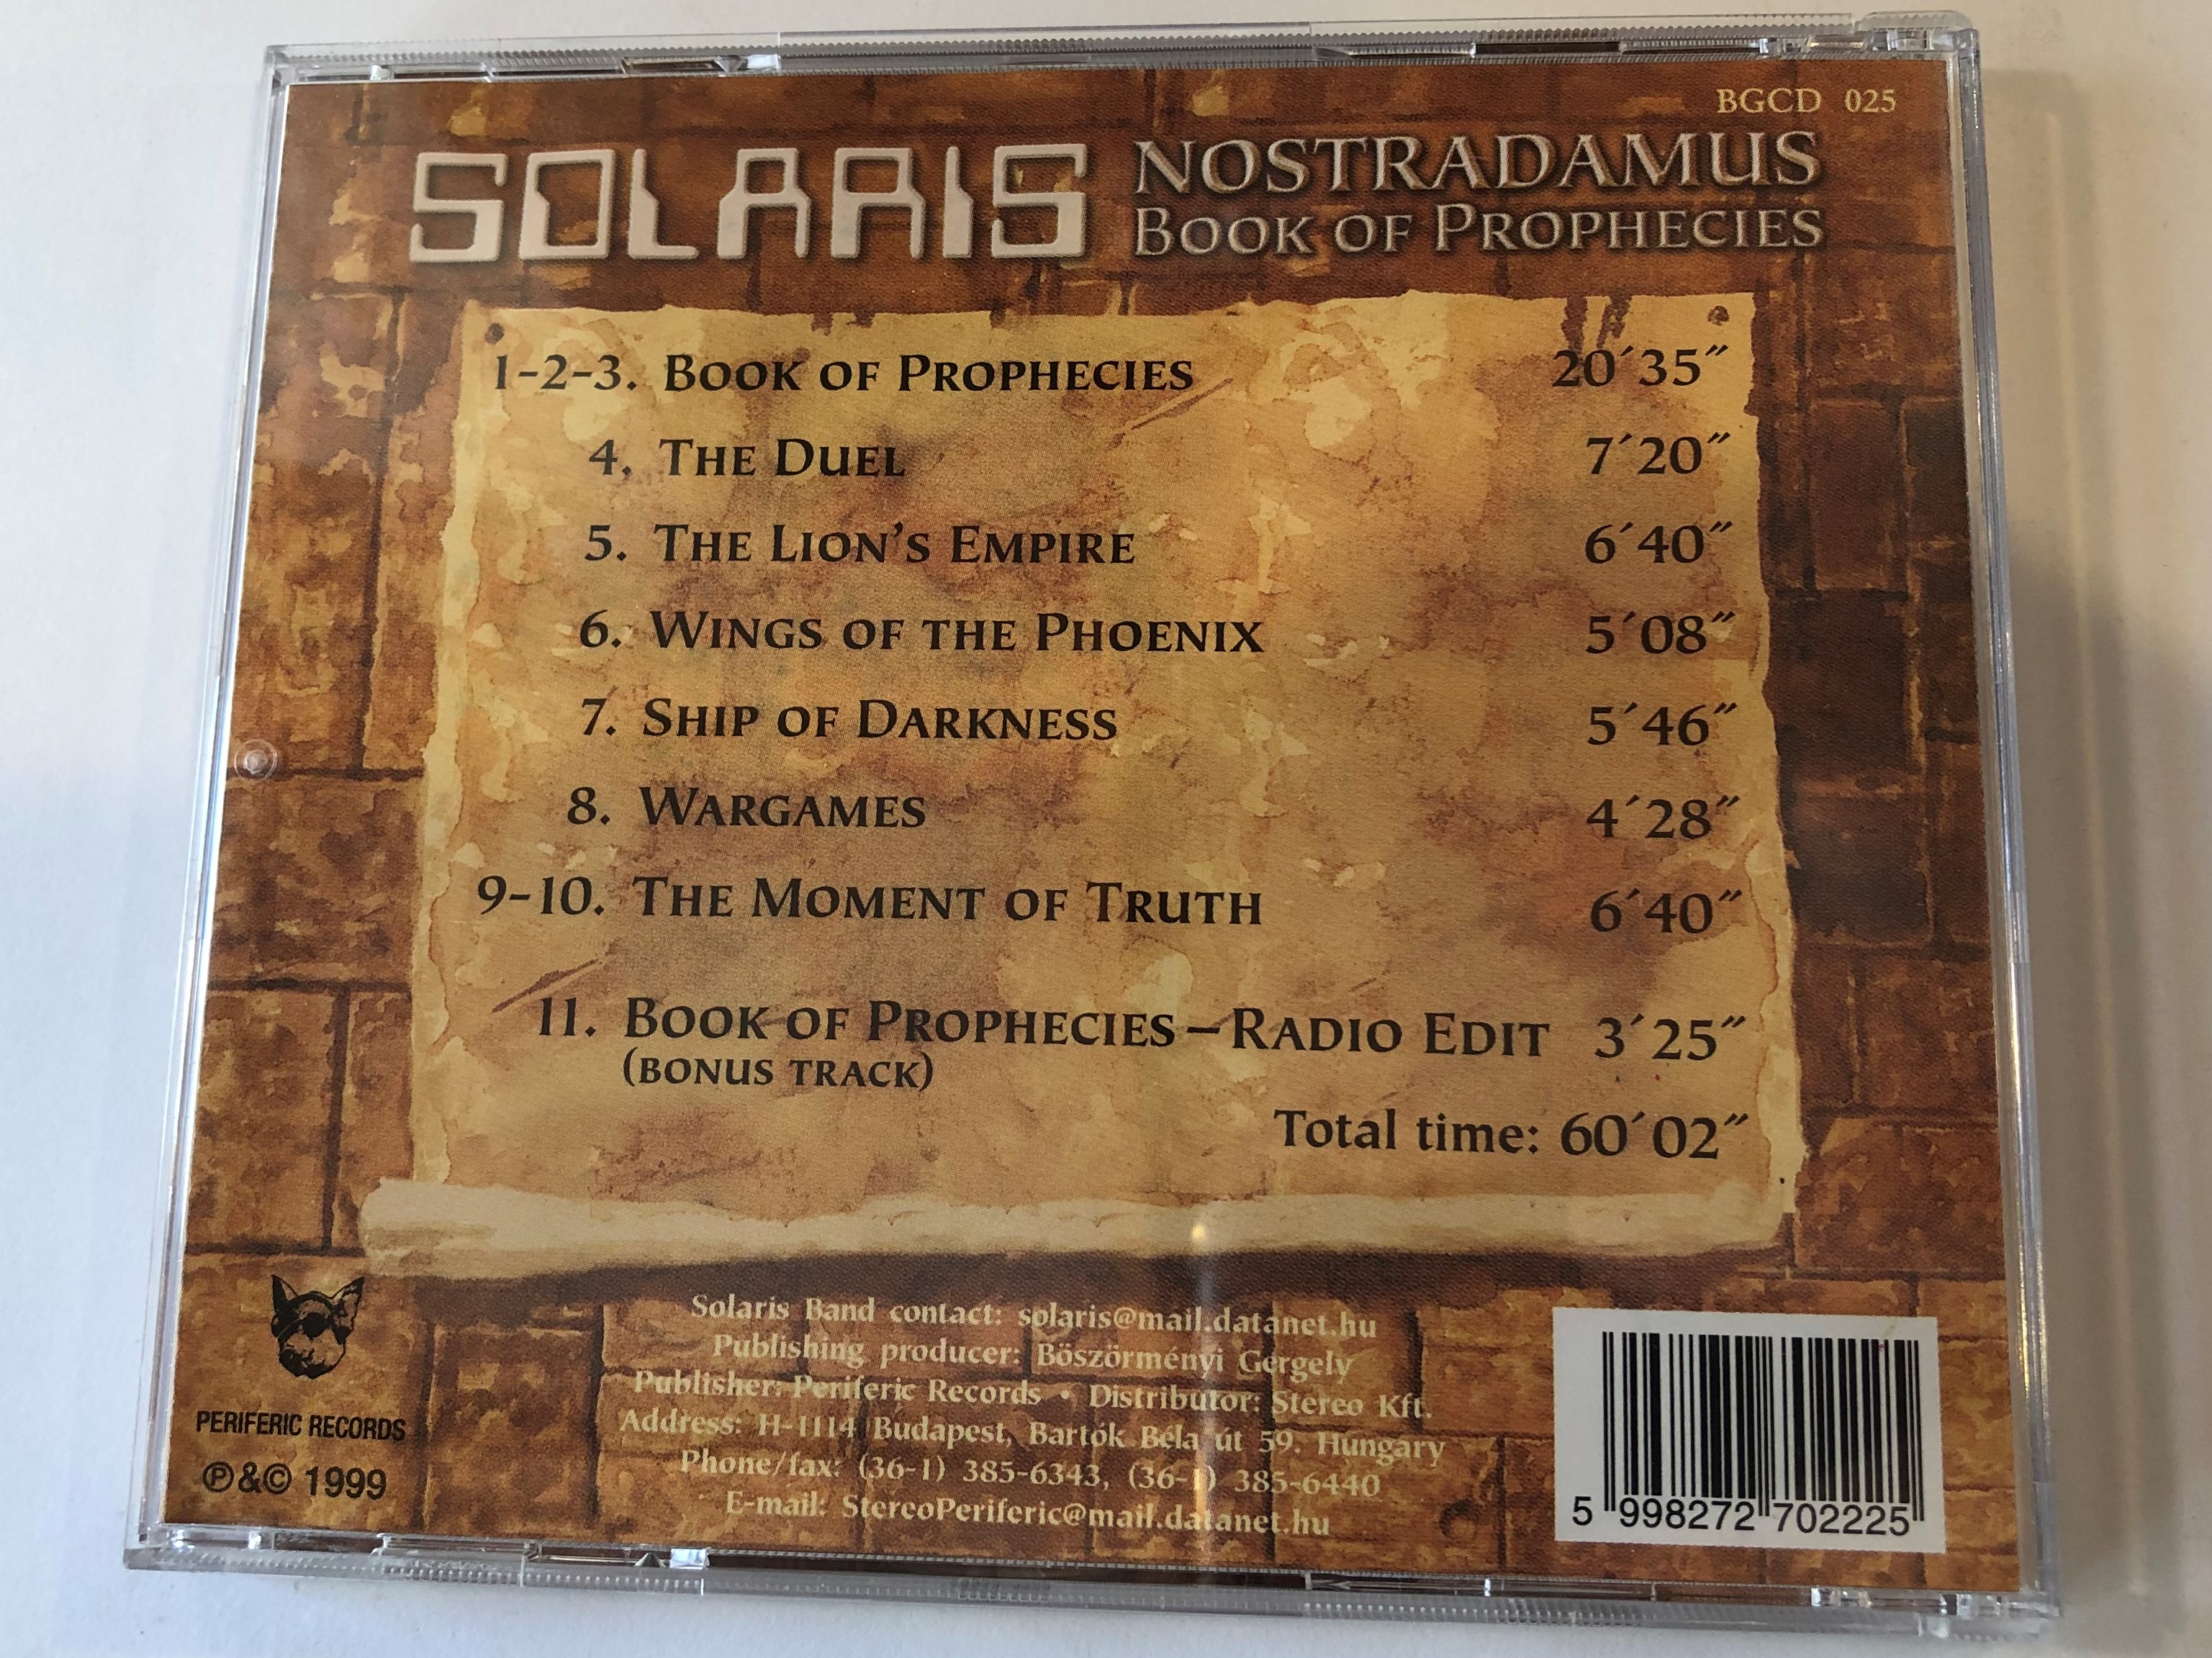 solaris-nostradamus-pr-f-ci-k-k-nyve-book-of-prophecies-periferic-records-audio-cd-1999-bgcd-025-4-.jpg